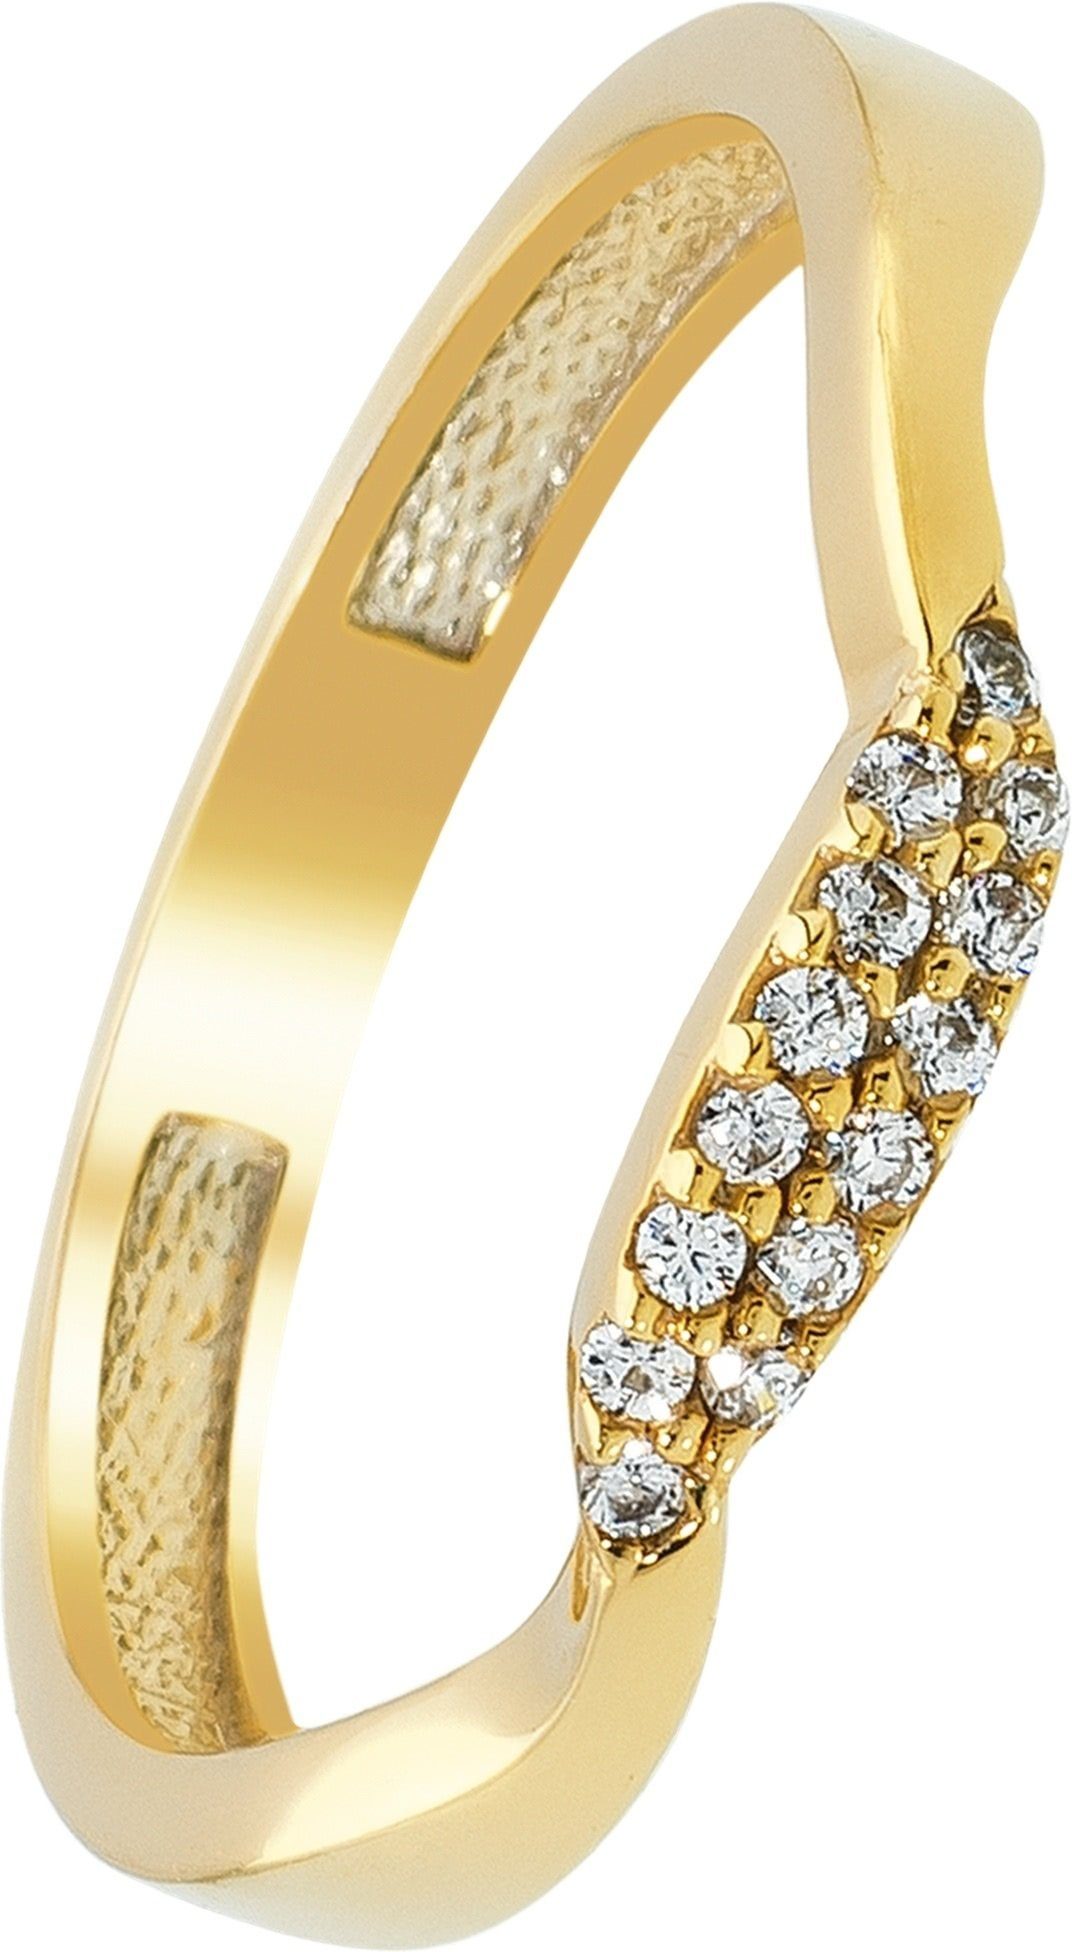 Balia Goldring Balia Ring Größe - (Welle (17,8), Damen Gelbgold 56 333 8 Welle 333 Gelbgold gold) Fingerring 3 Karat (Fingerring), Gold